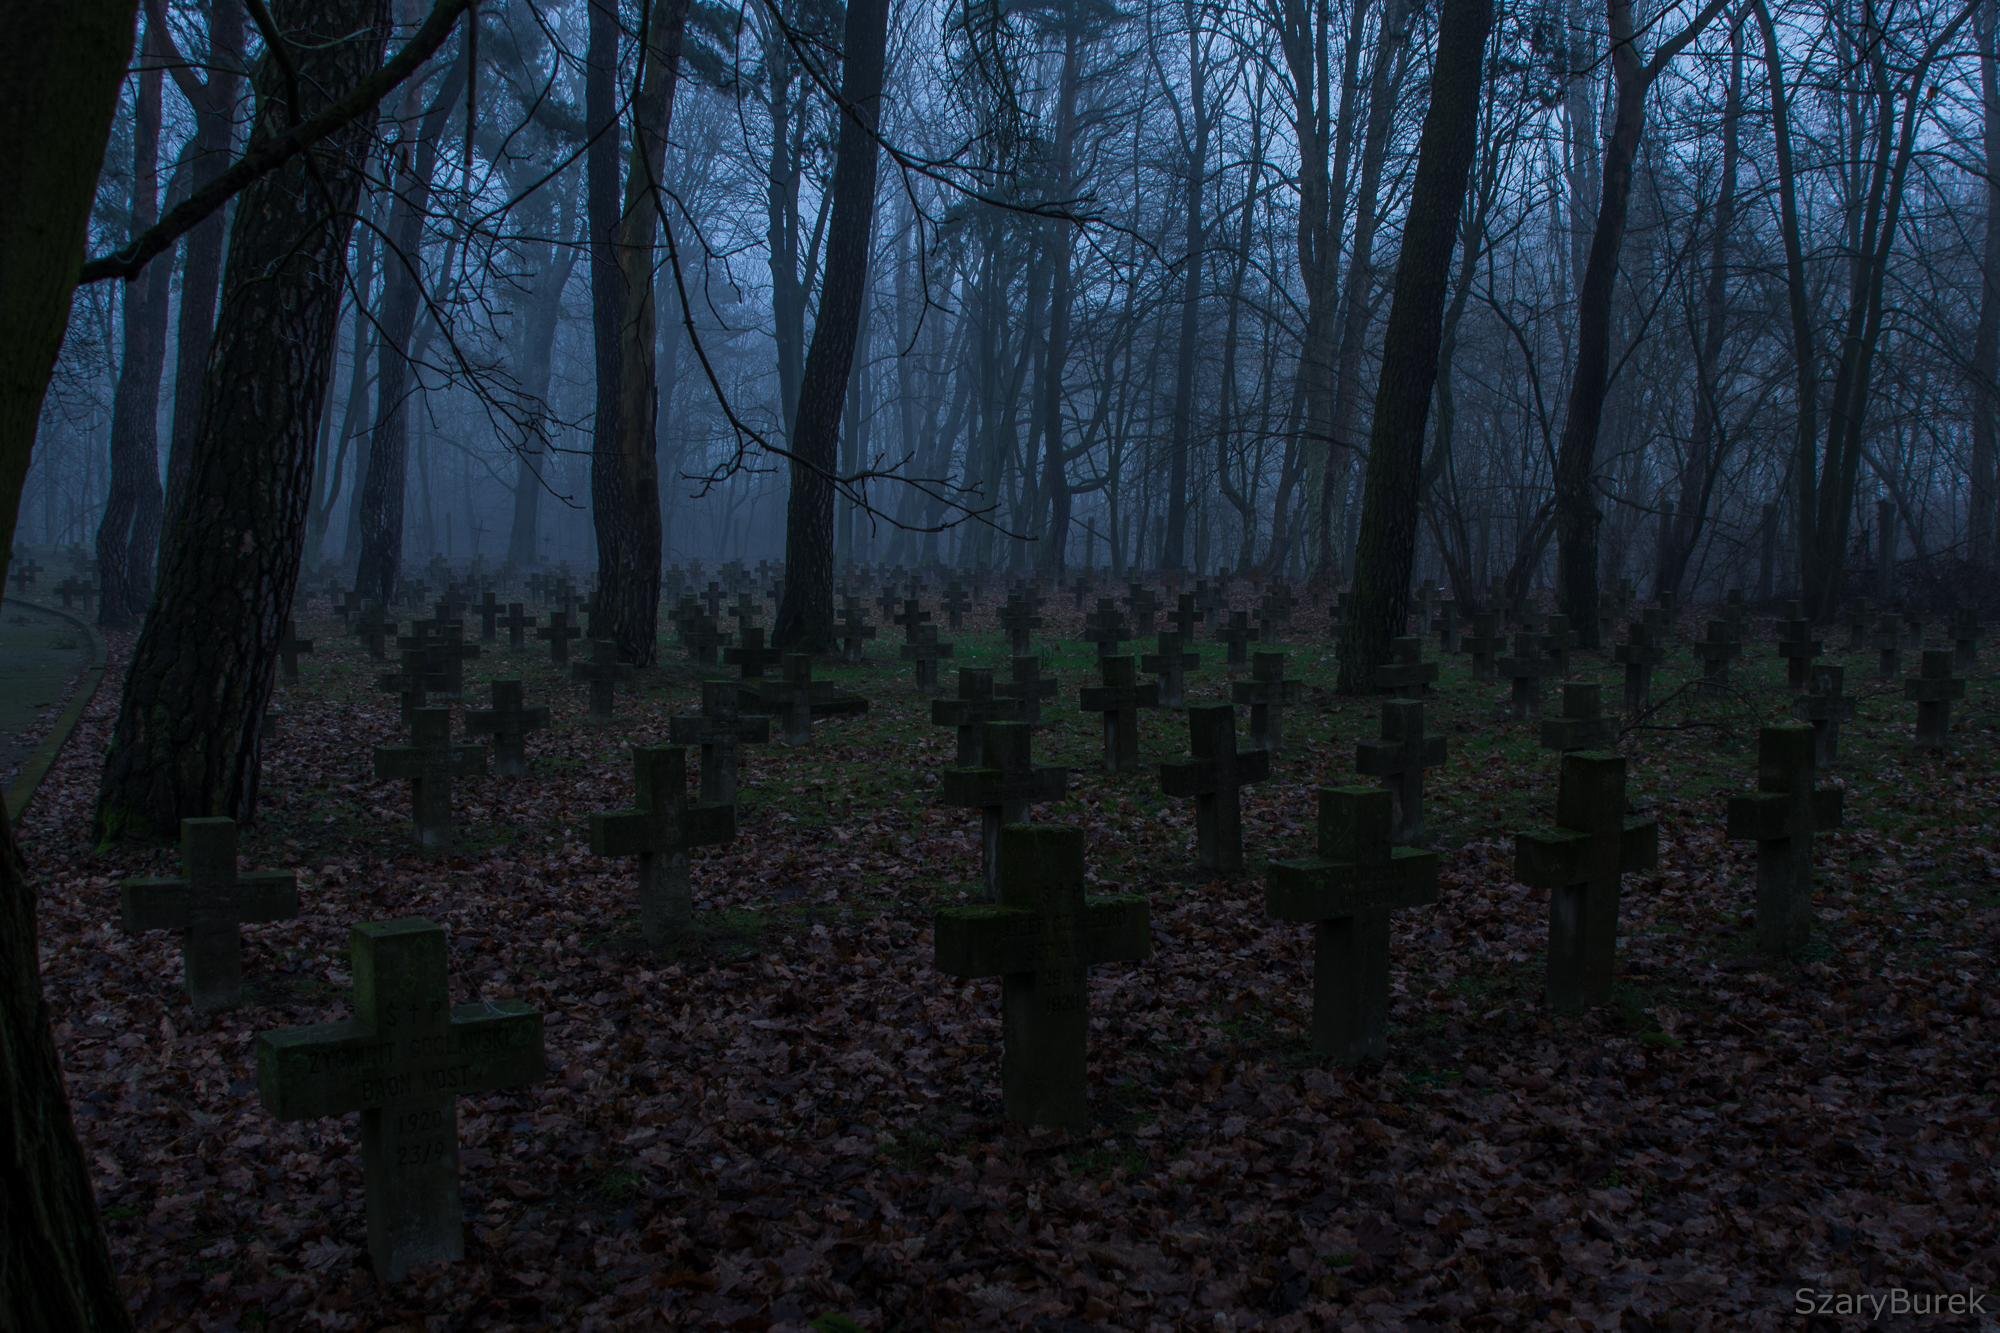 Румынский склепы на кладбище